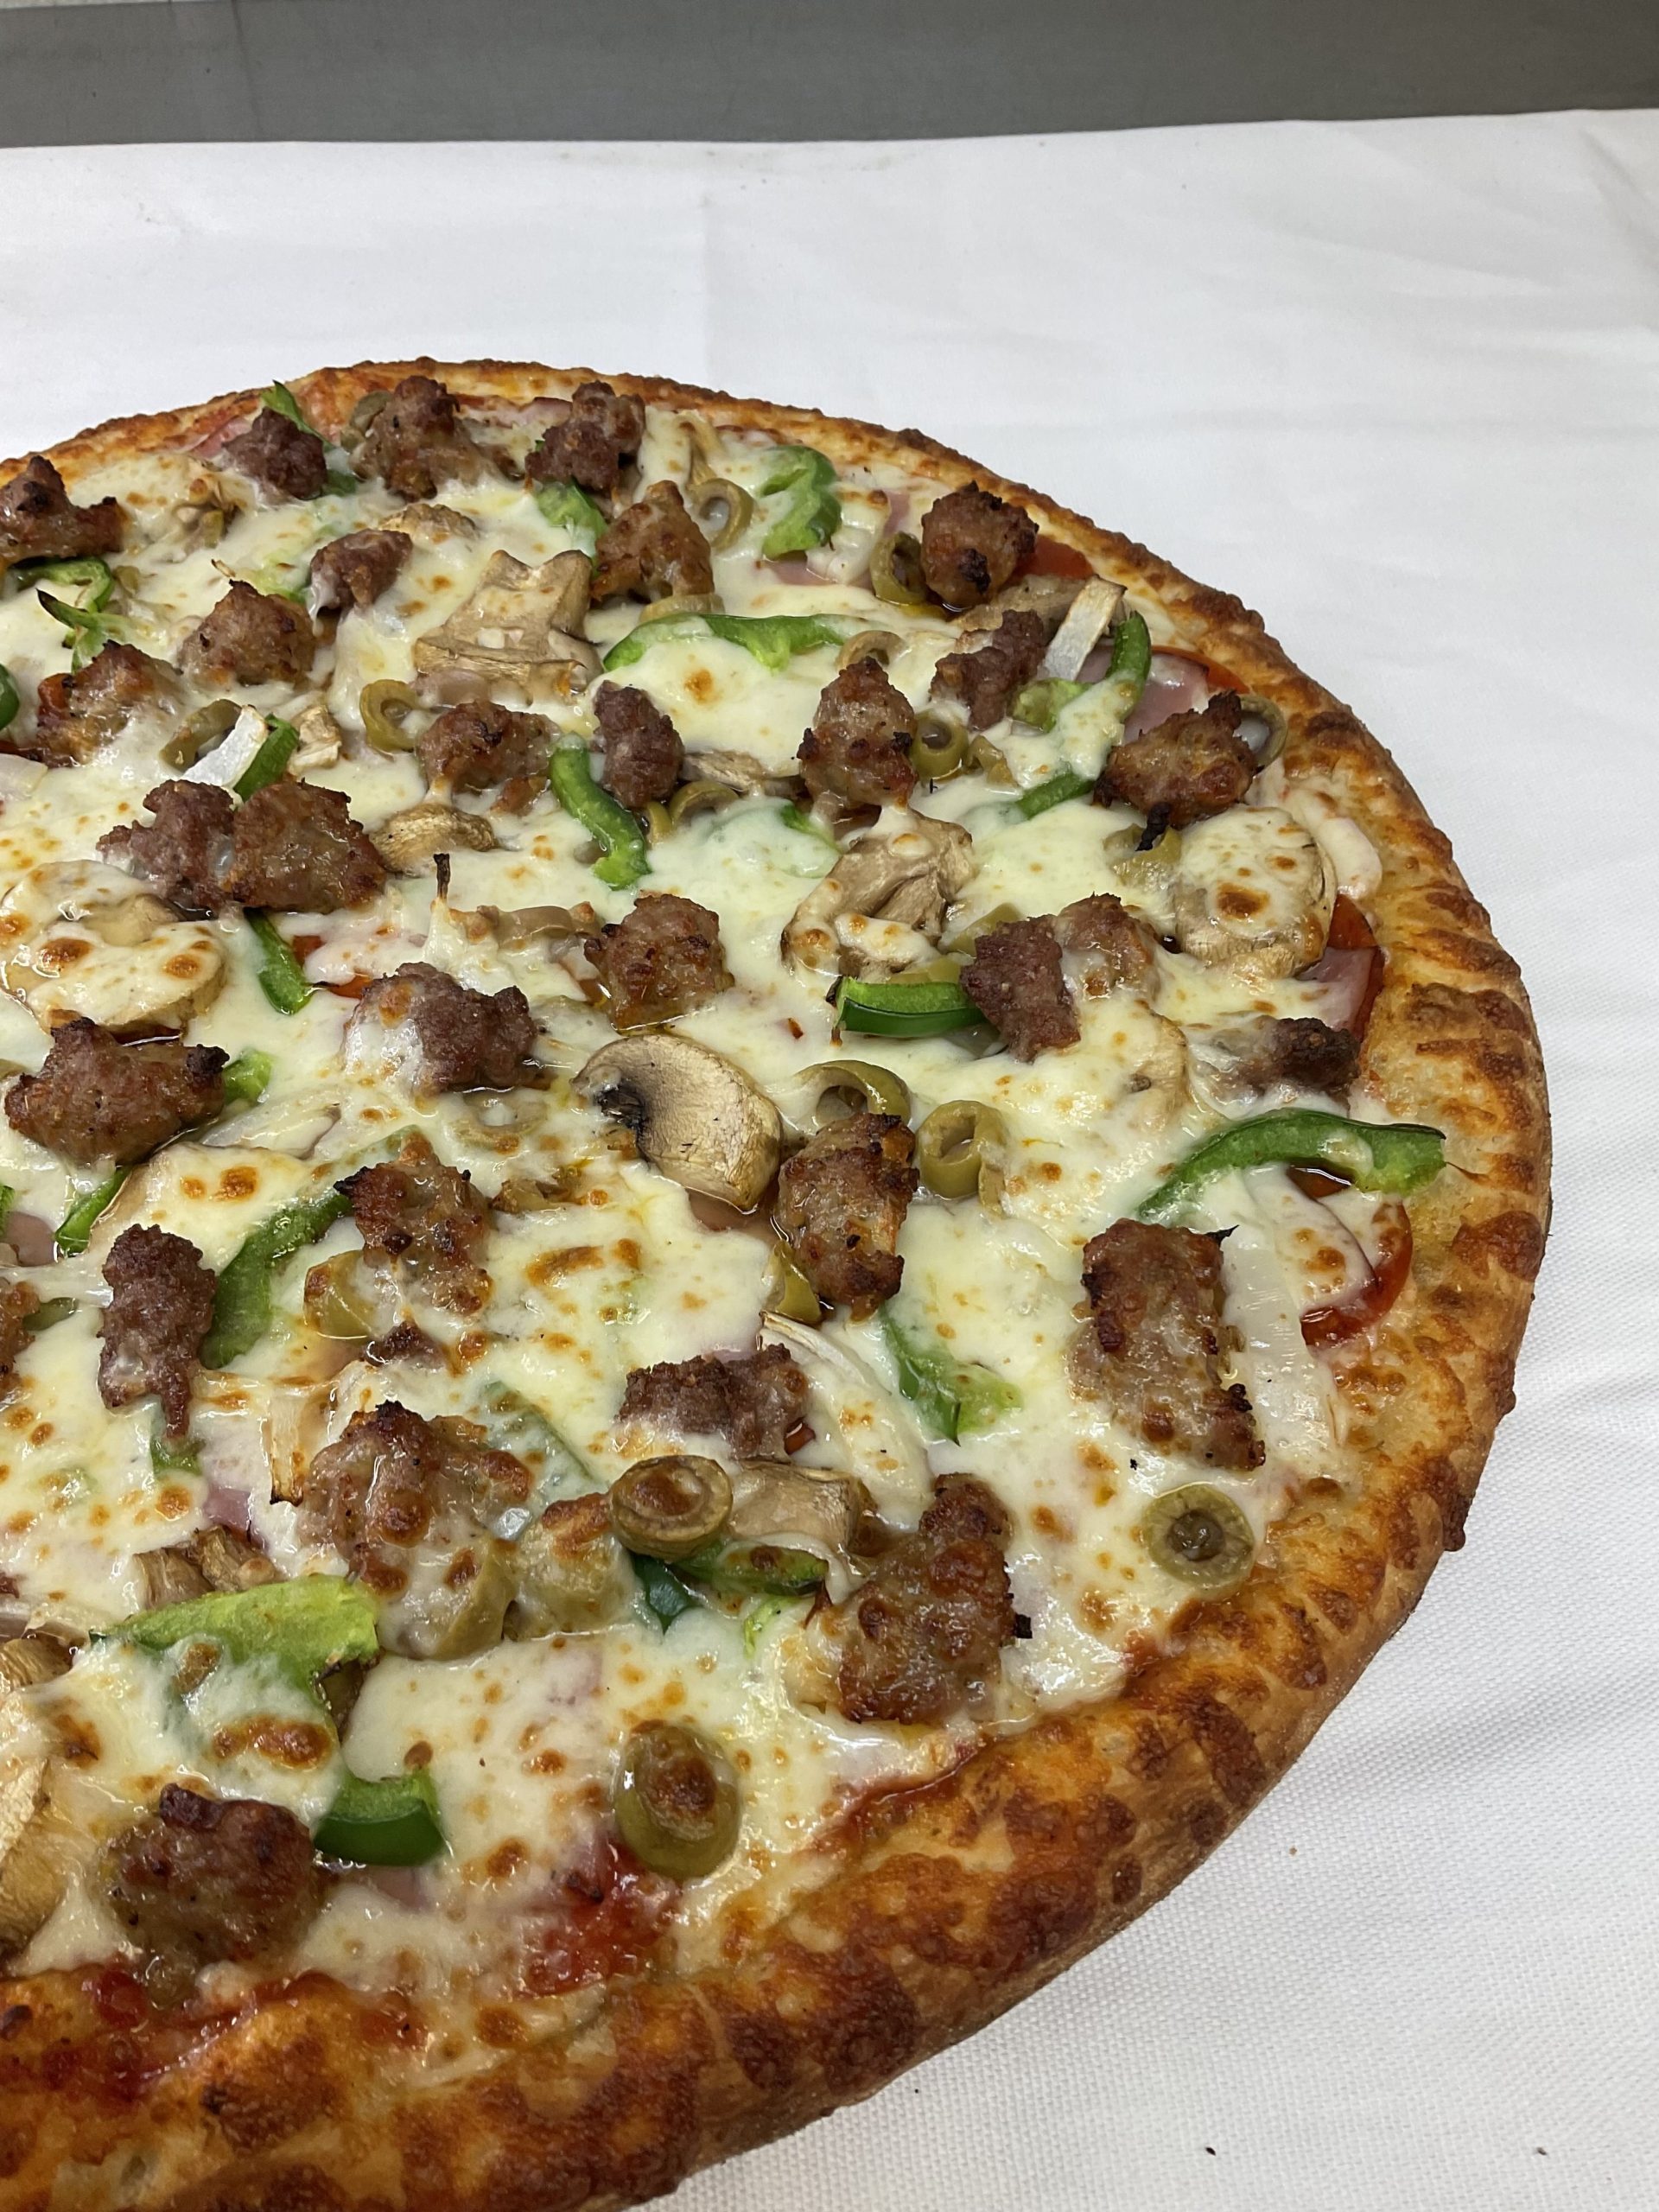 Benito's Pizza – The Flavor Experts!